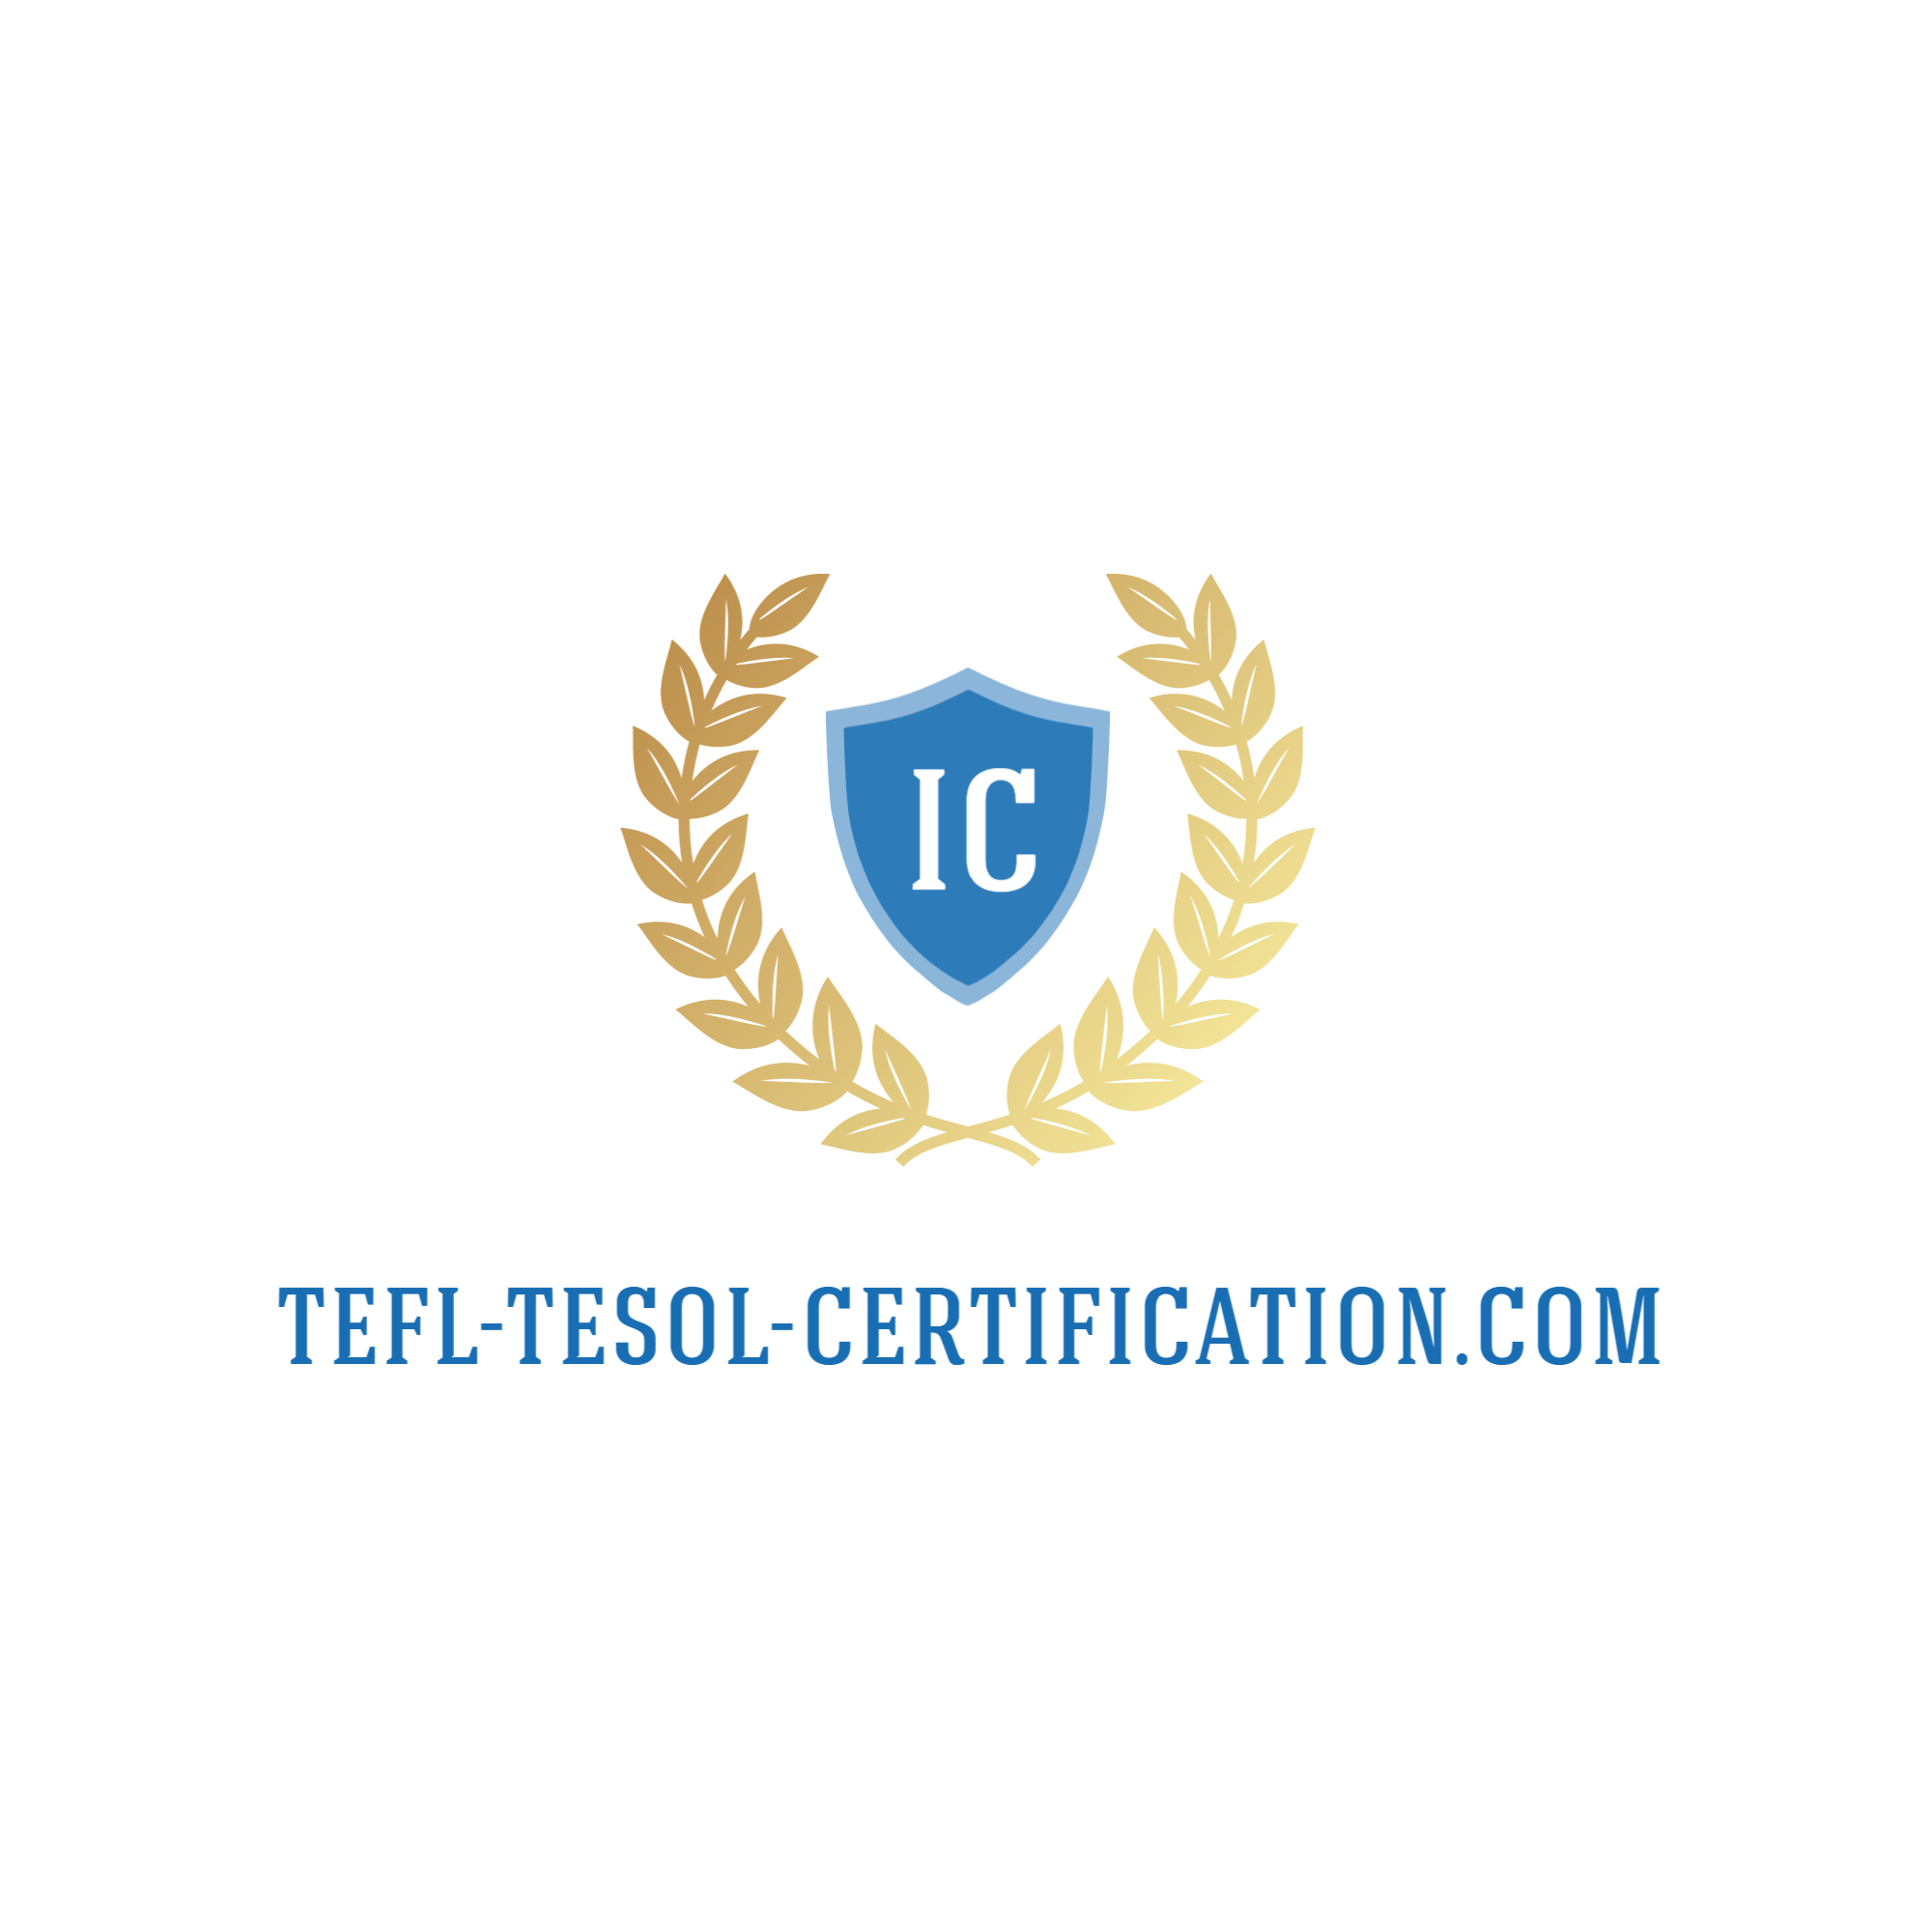 tefl-tesol-certification